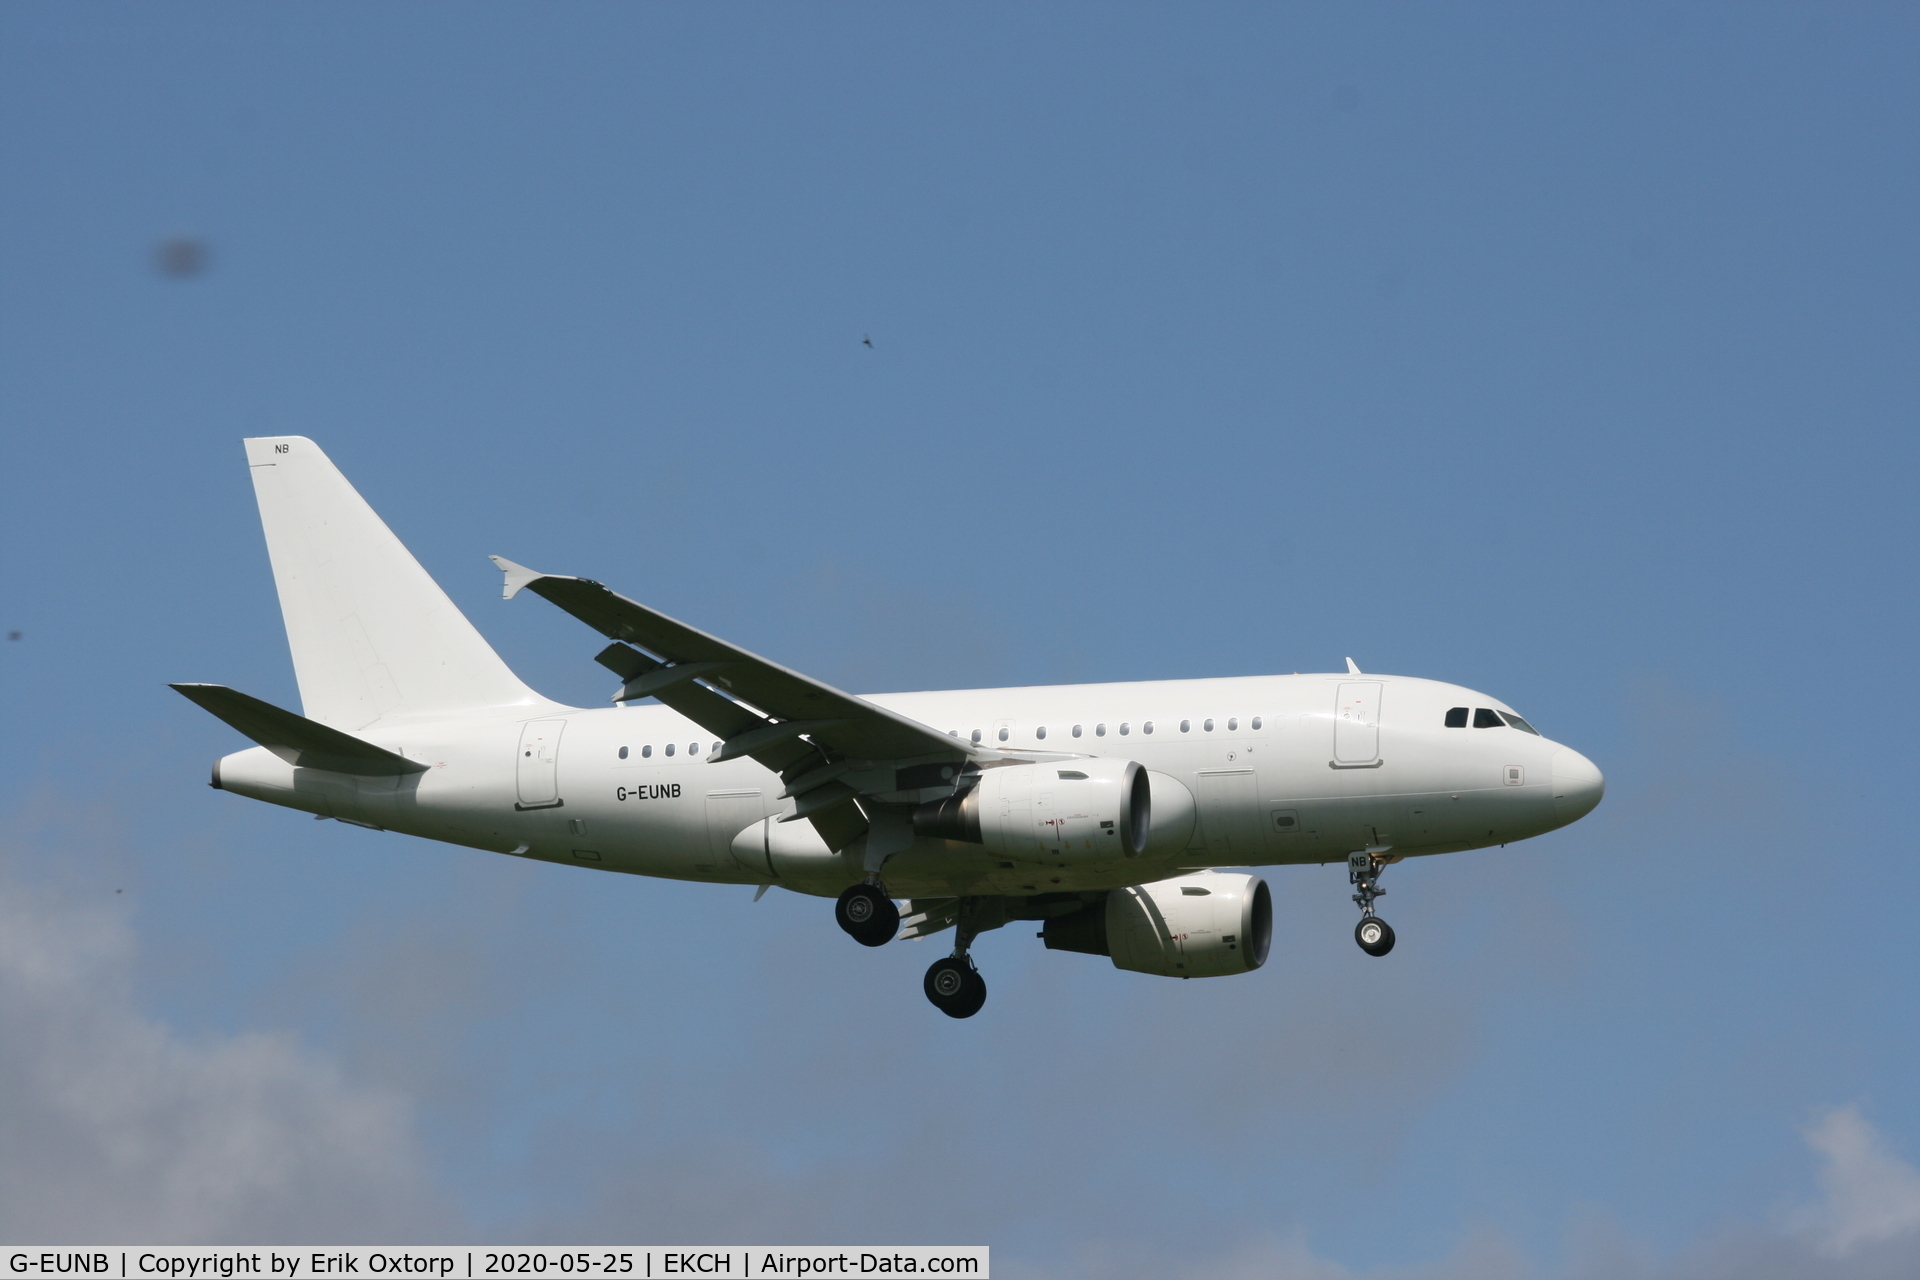 G-EUNB, 2009 Airbus A318-112 C/N 4039, G-EUNB landing rw 04L